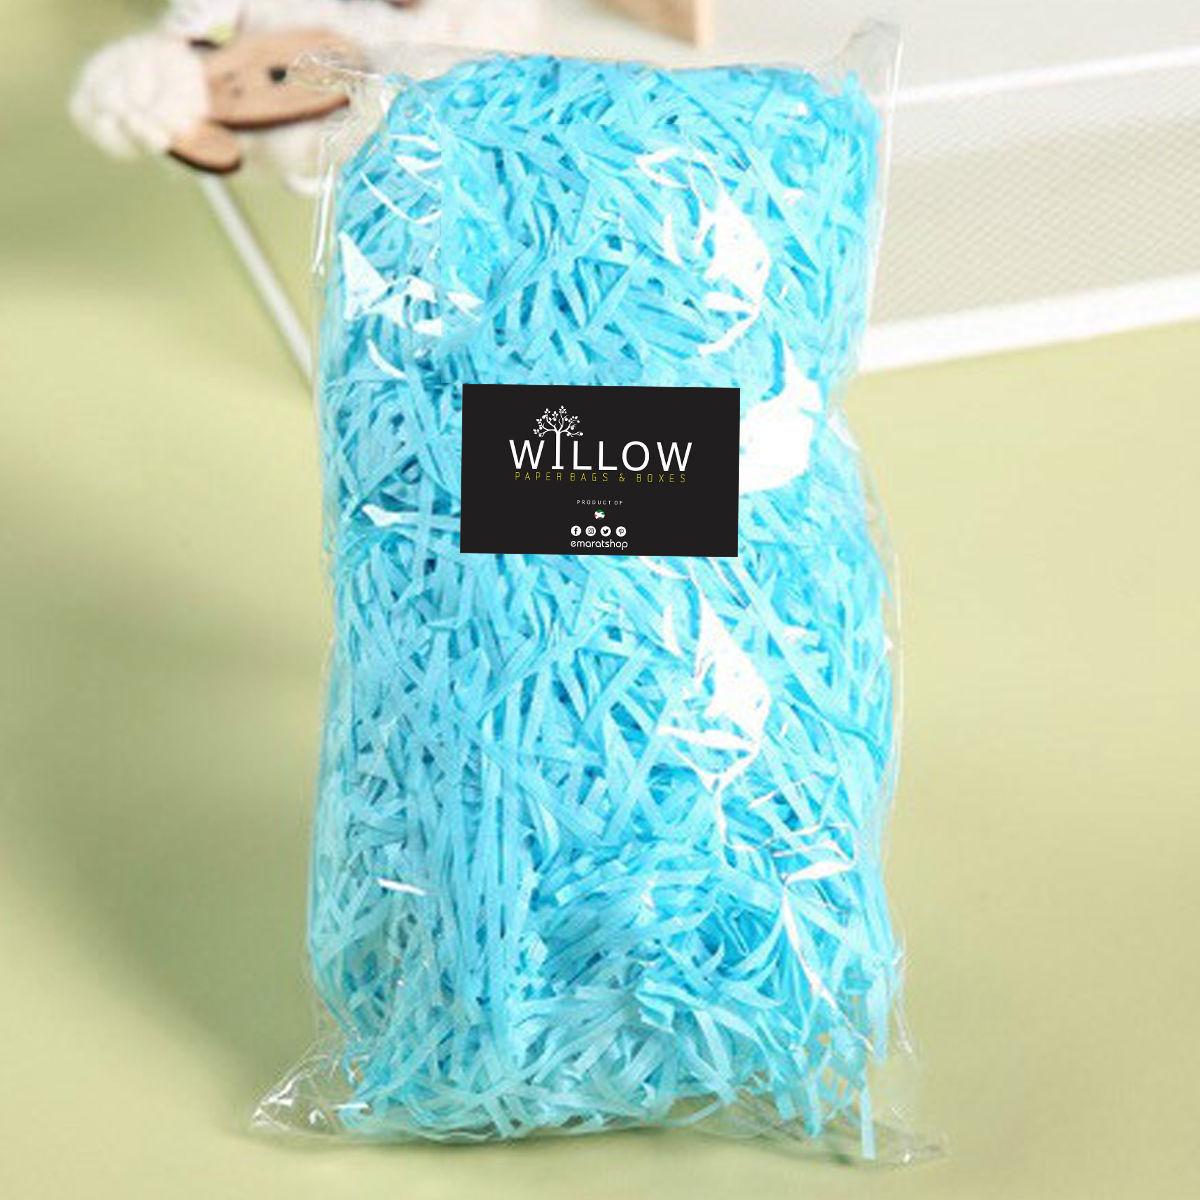 100g/Bag Professional laser Paper Cut Shredded Crinkle Filling Paper Confetti For Packing - PINK